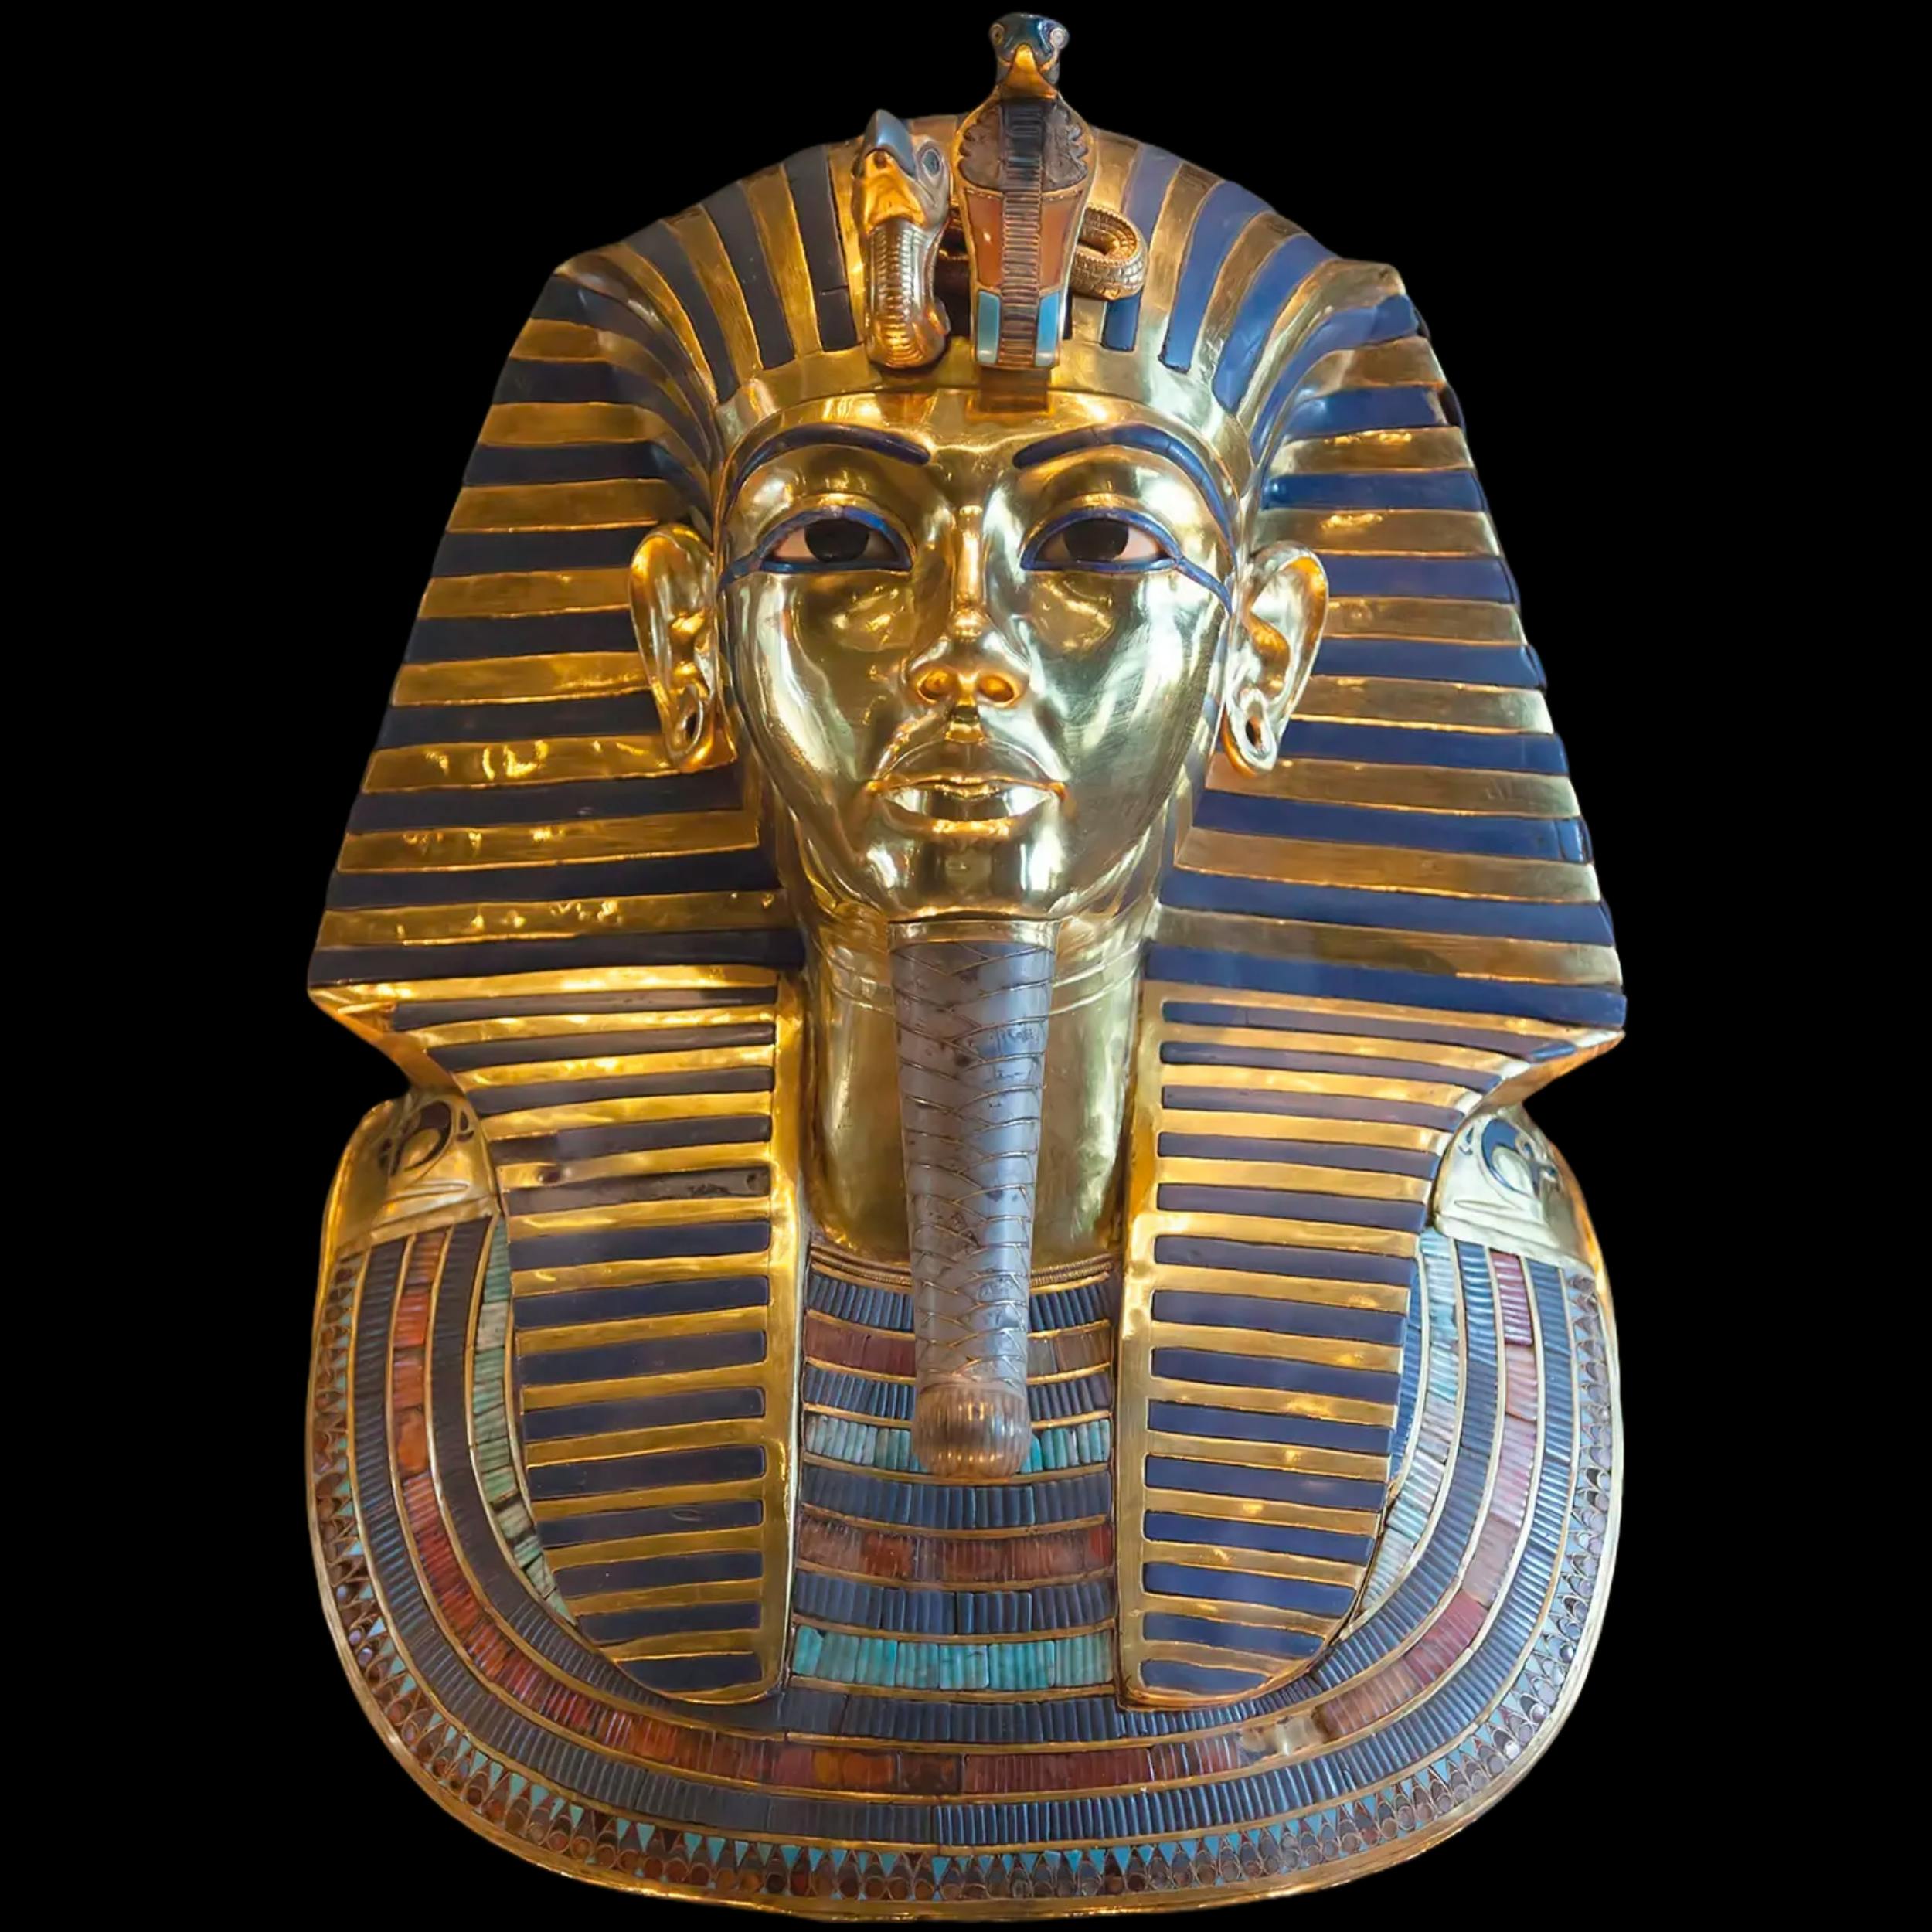 The Treasures of King Tutankhamun's Tomb